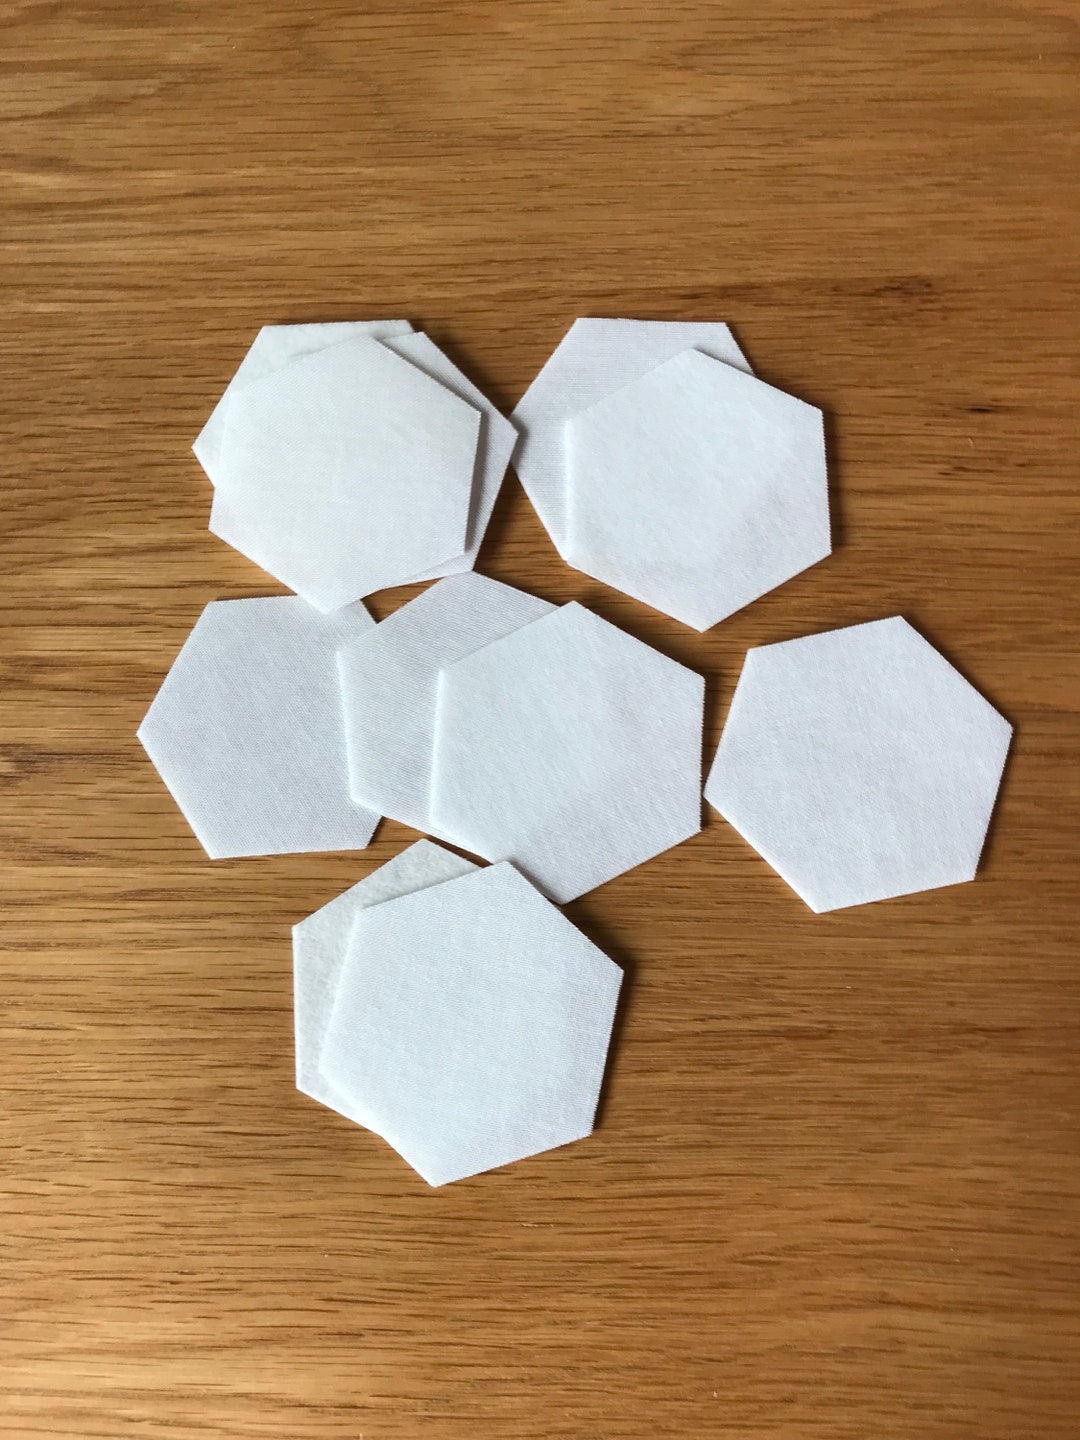 The Maker's Stash - English Paper PiecingHoneycomb Paper Pieces